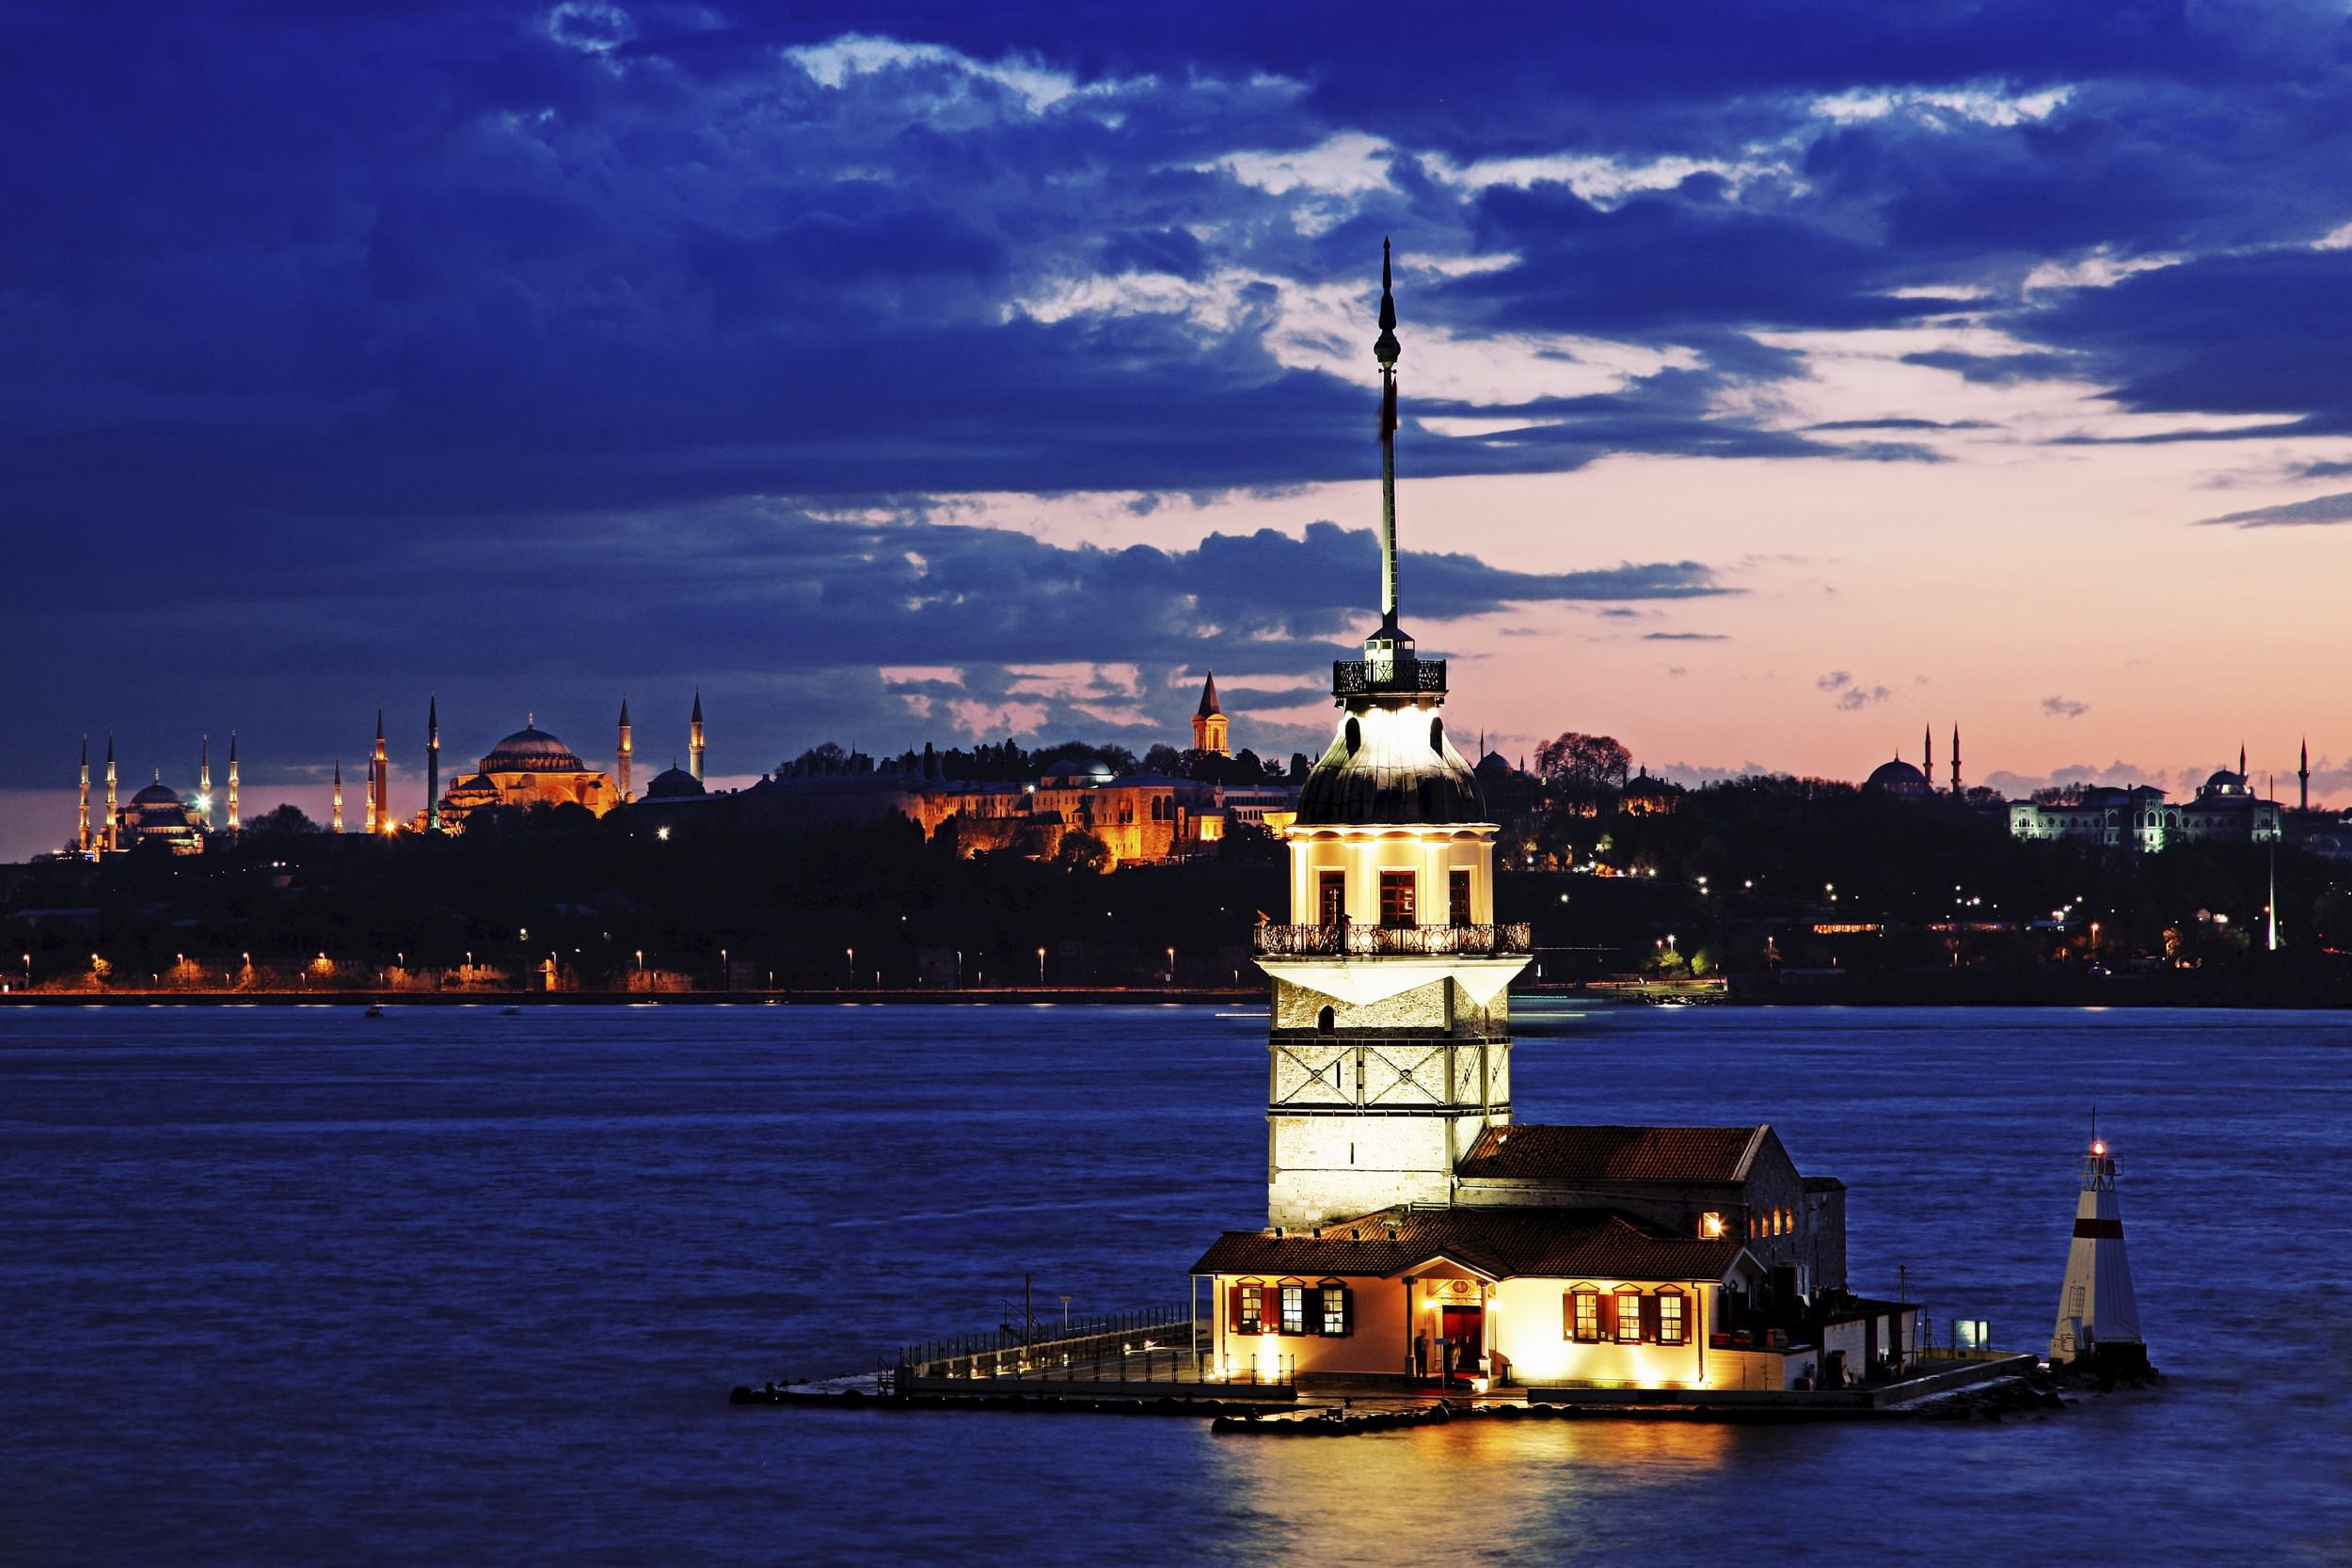 Istanbul  HD wallpapers, Desktop wallpaper - most viewed